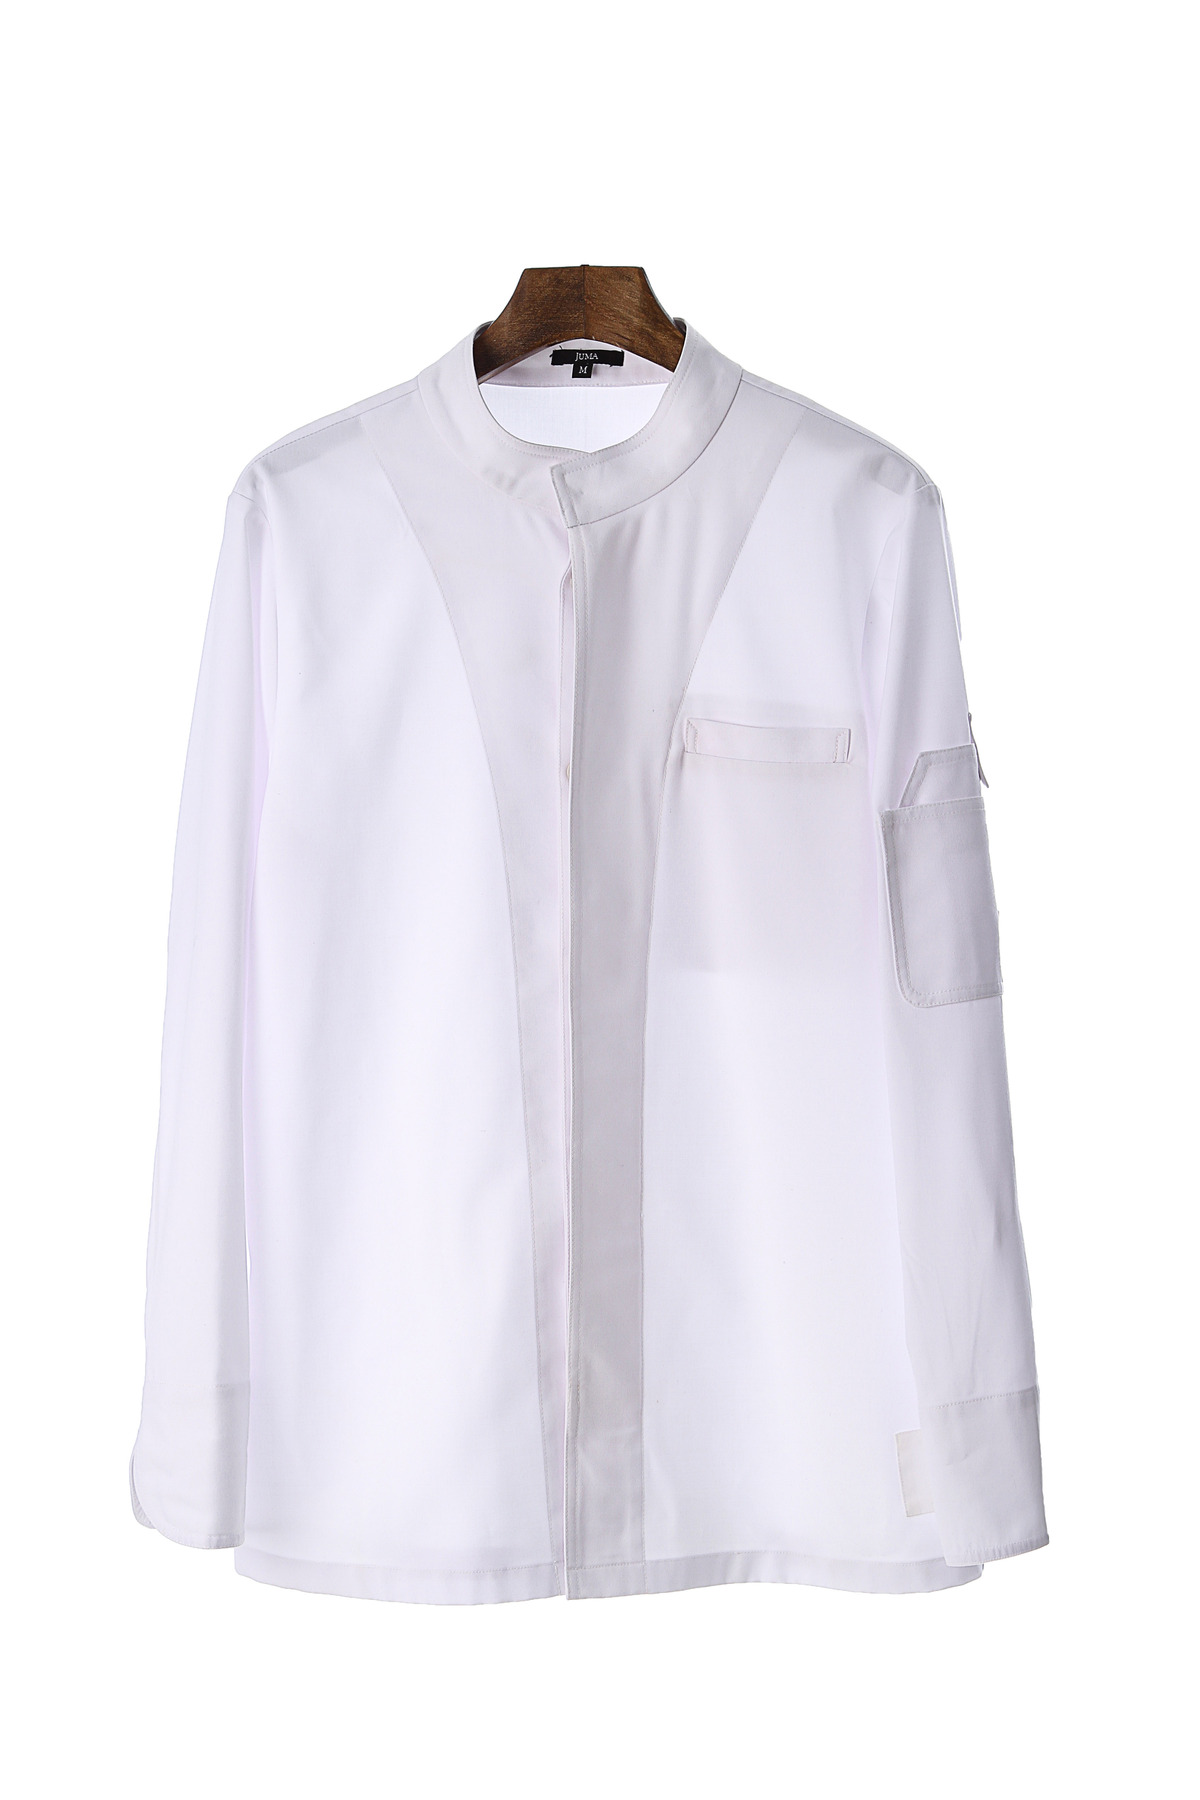 JUMA 中式领夹克-6个再生水瓶-白色｜JUMA Mandarin Collar Jacket - 6 Recycled Water Bottles - White